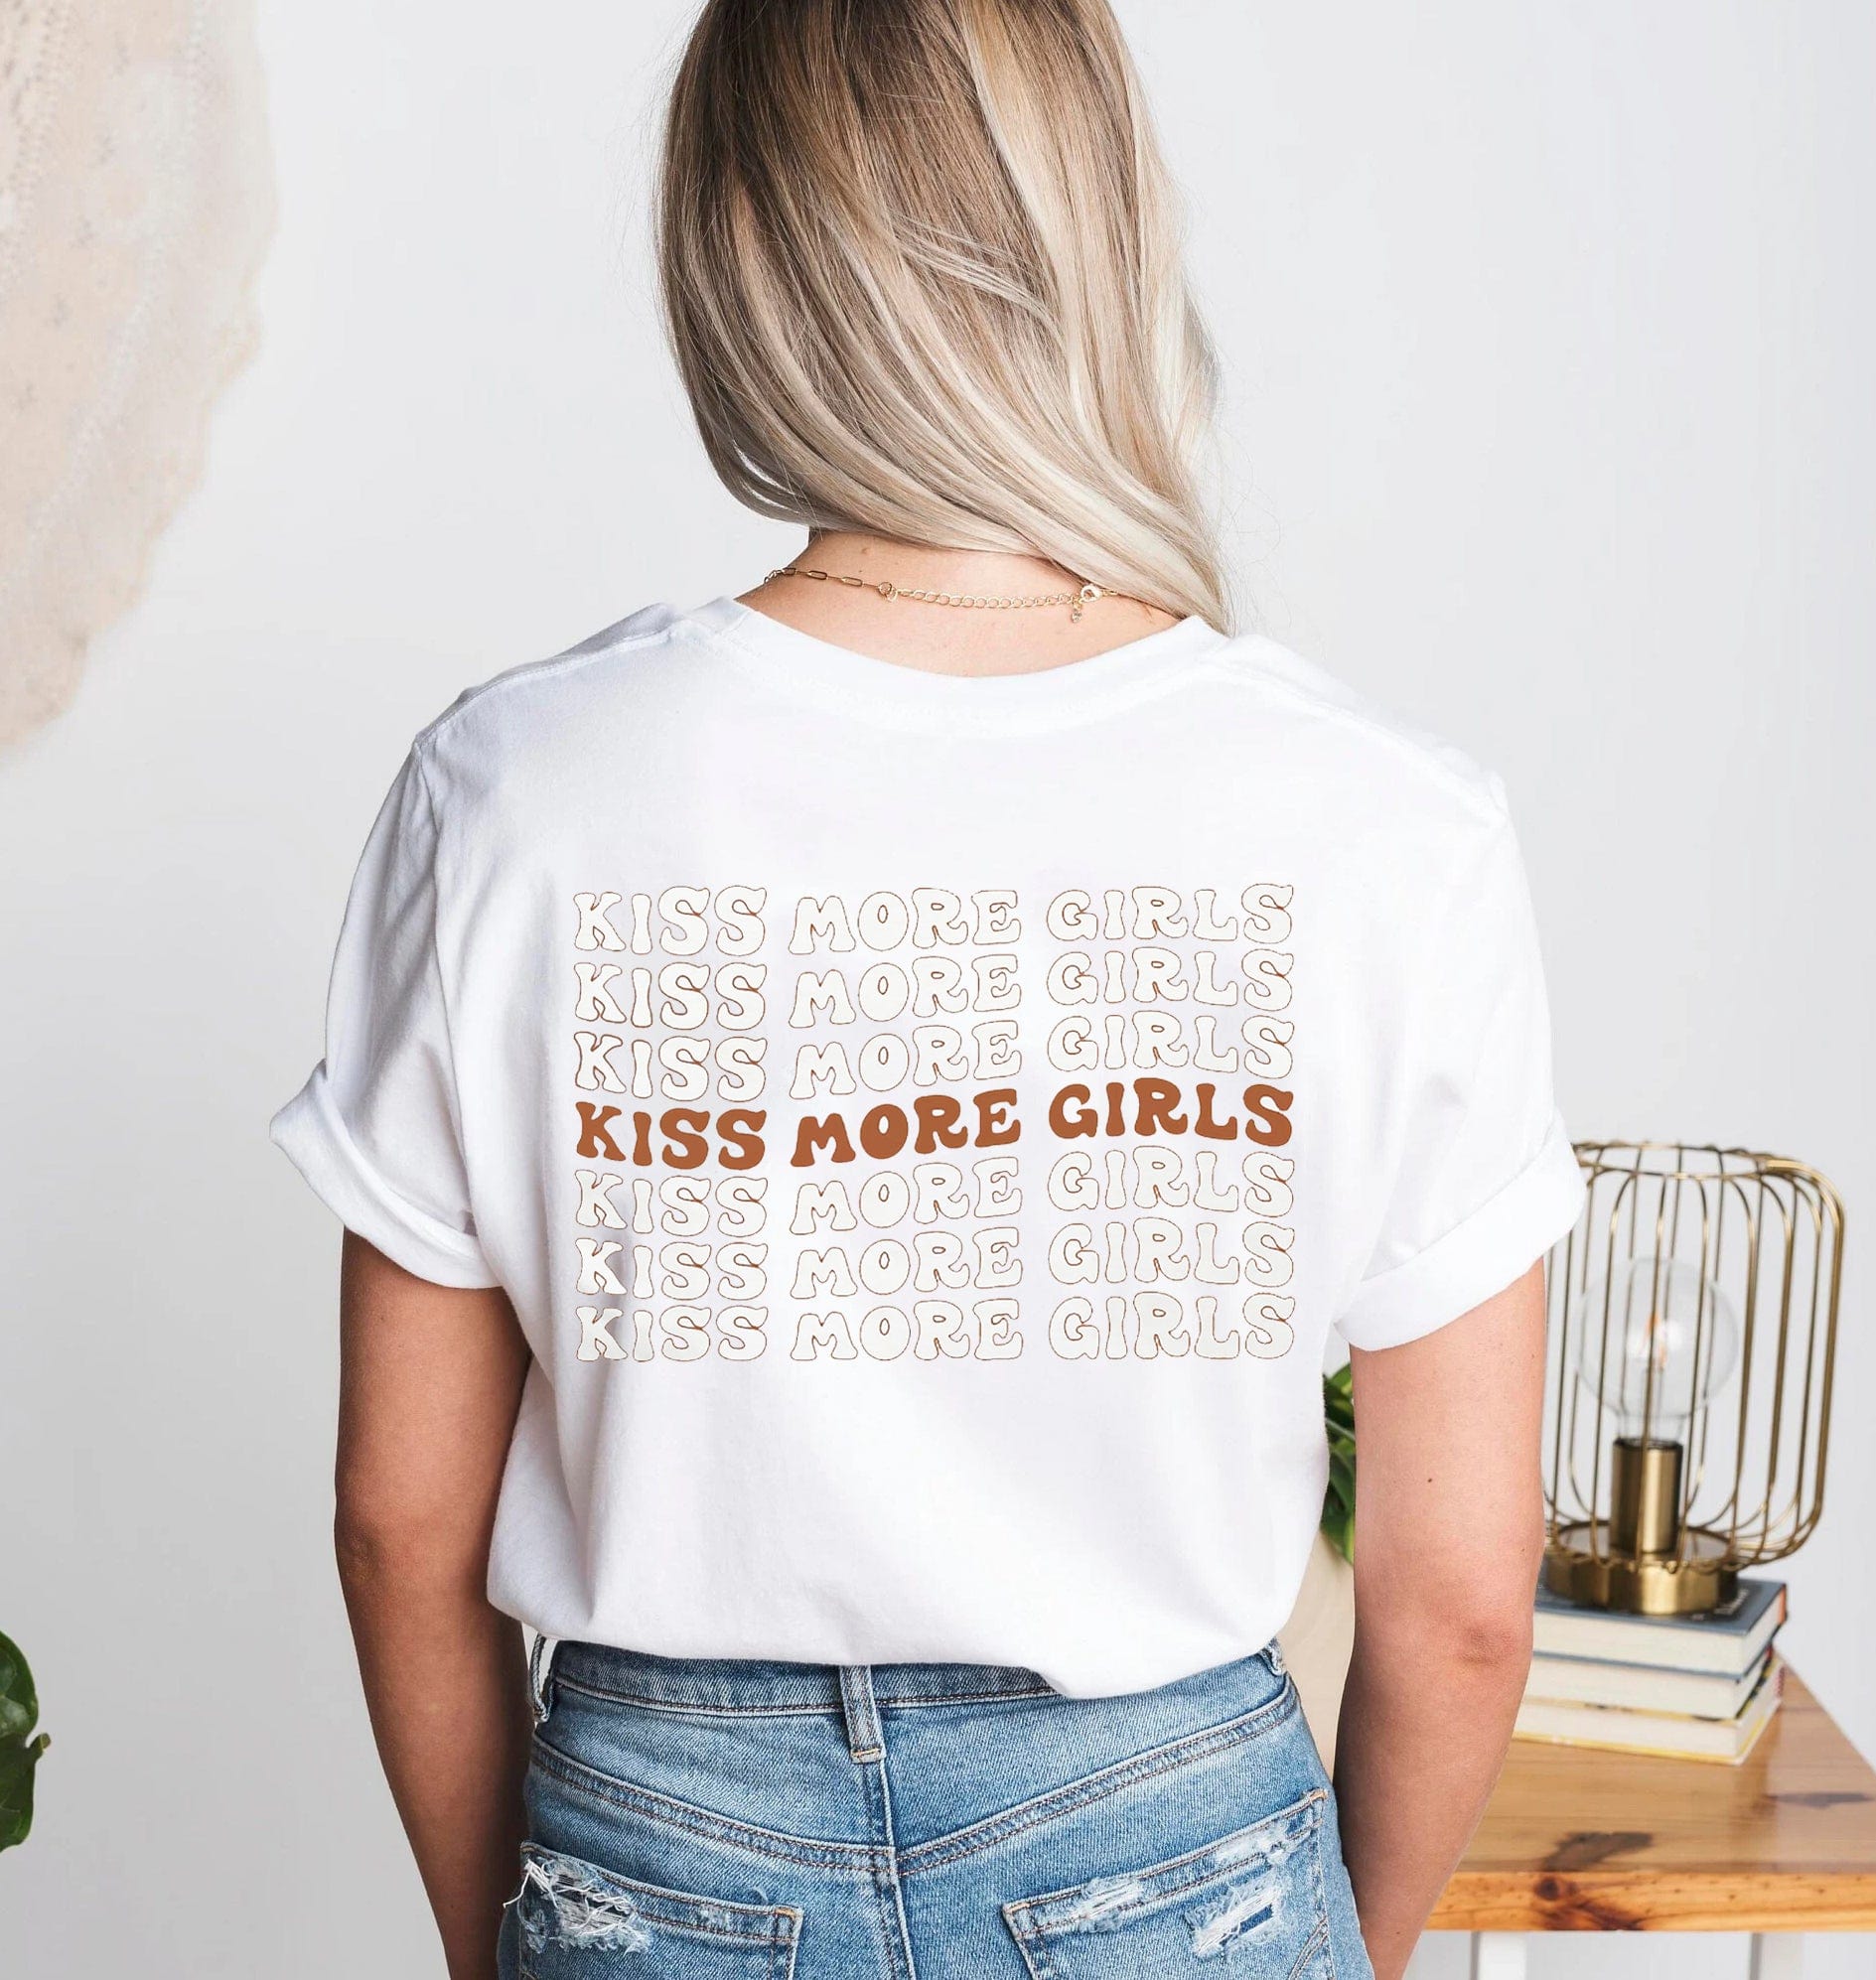 Lesbian Kiss More Girls LGBT Shirts